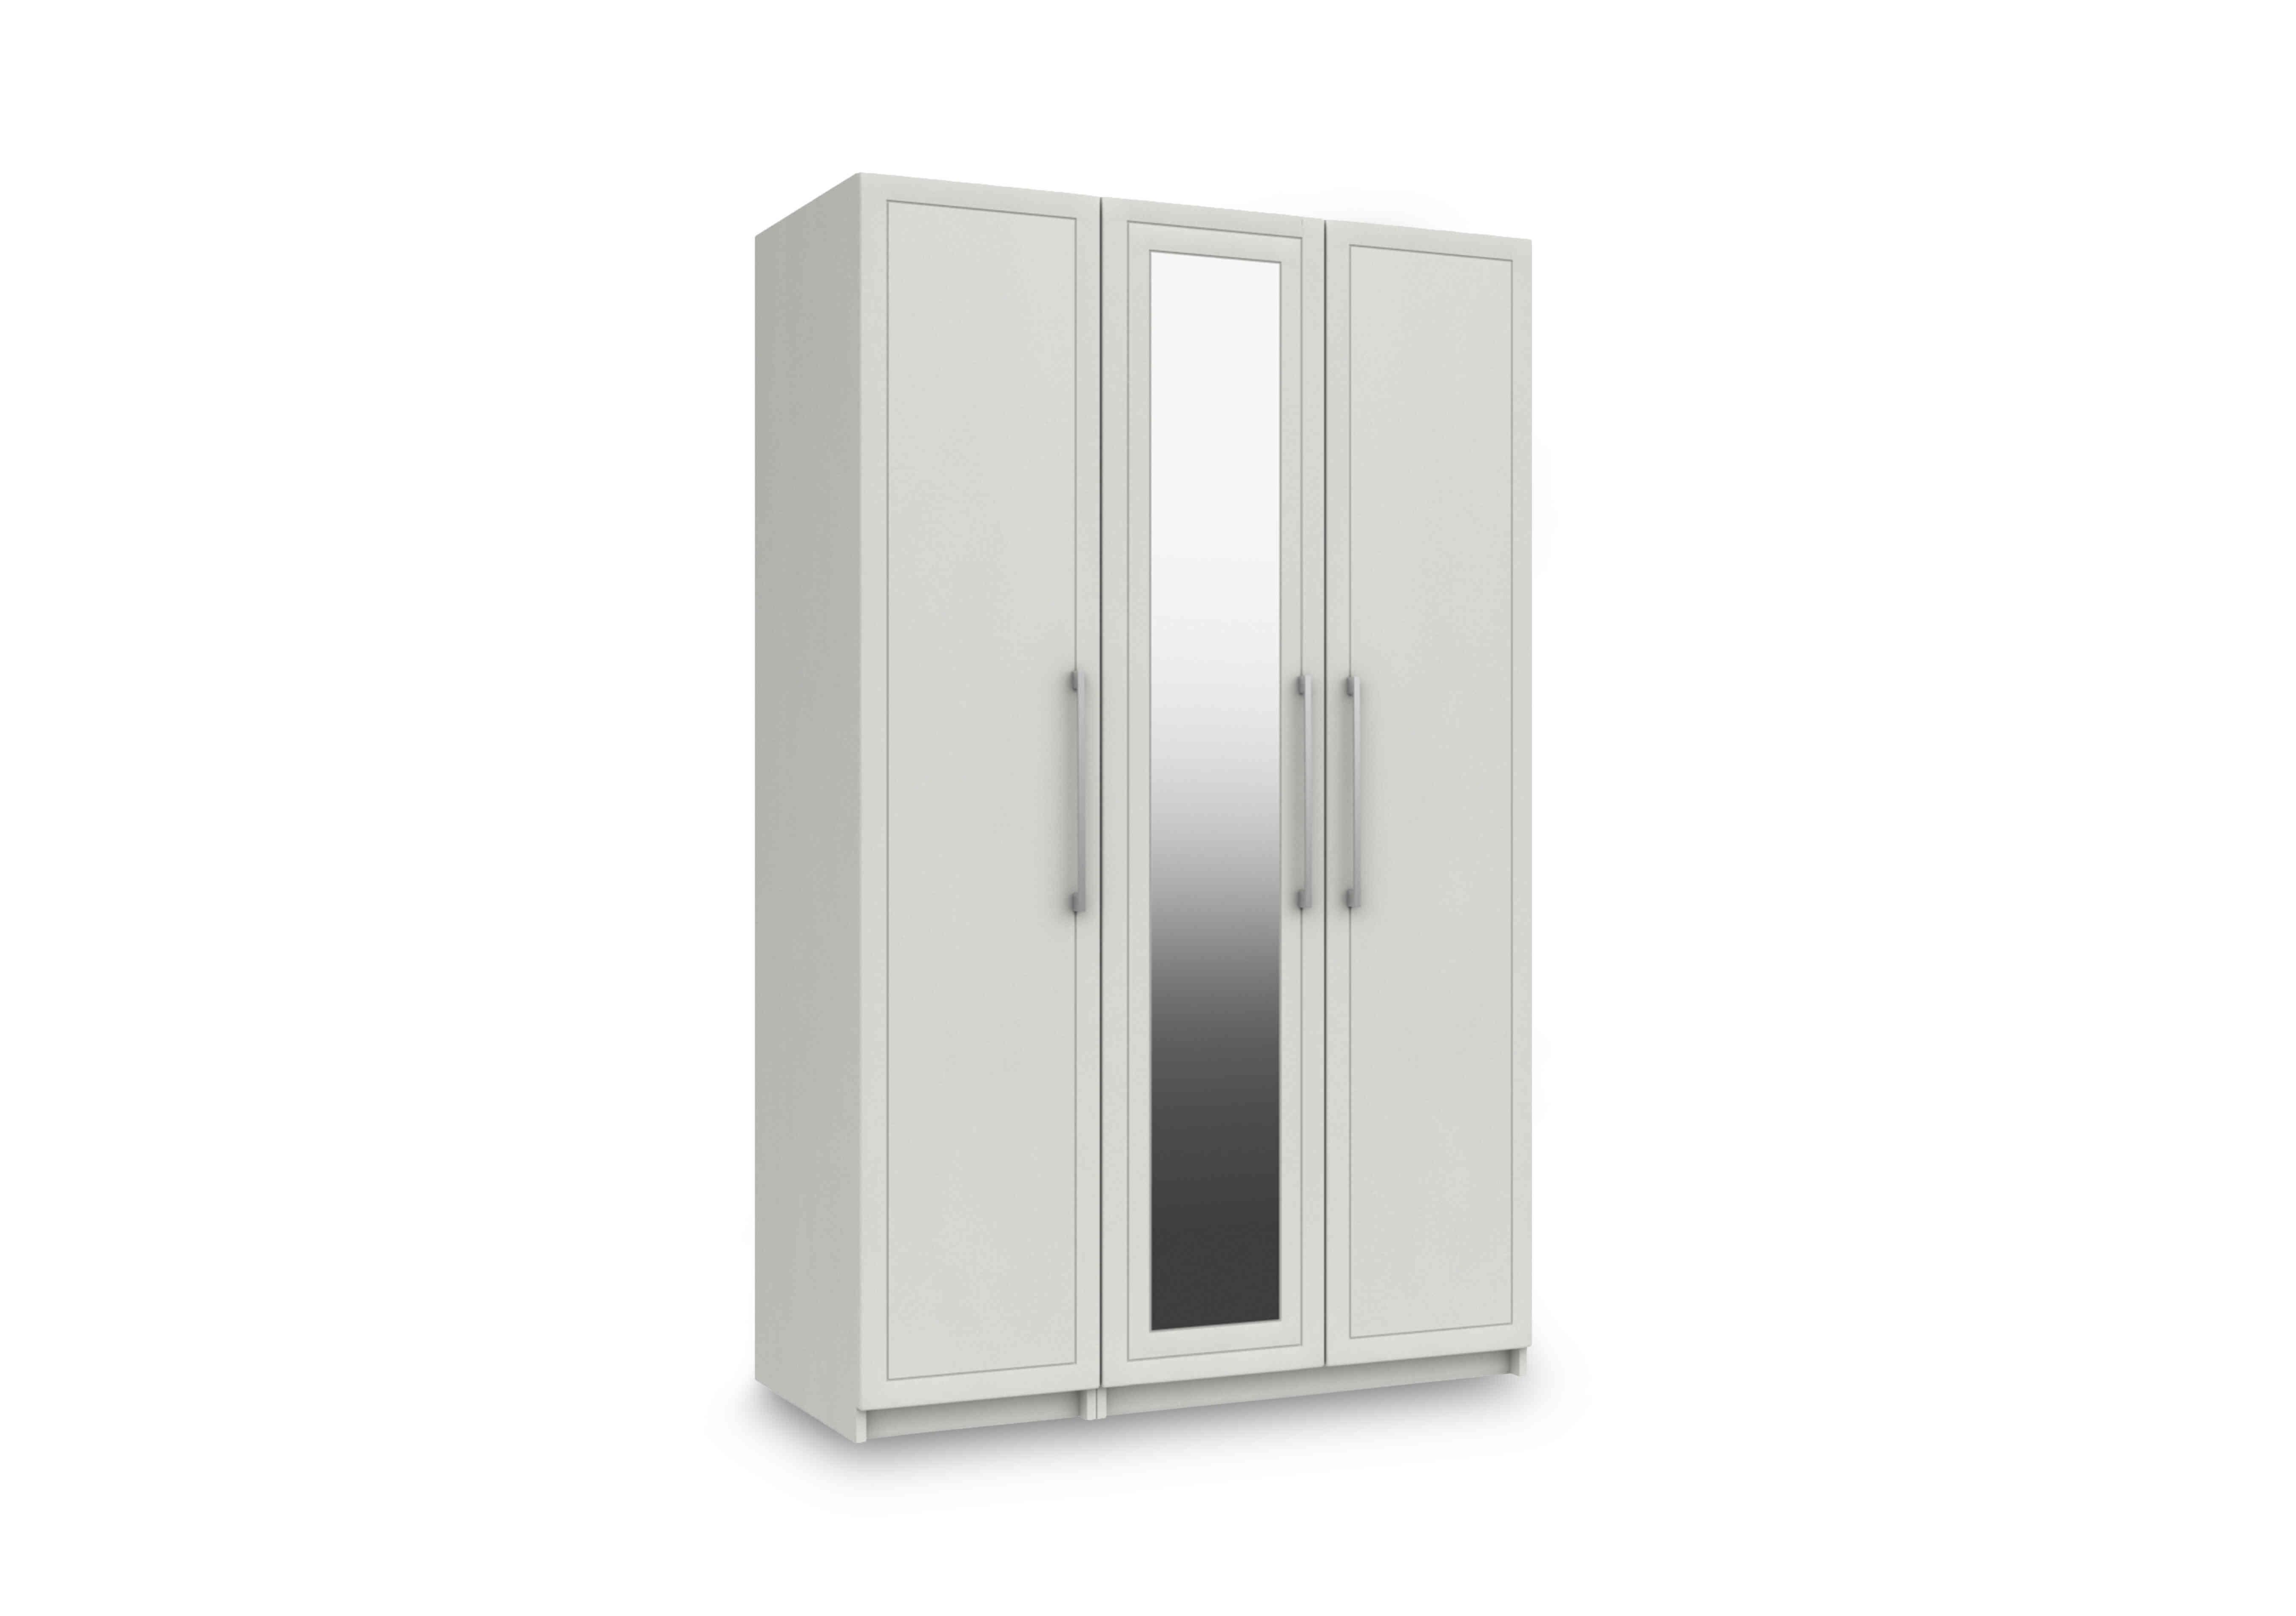 Bexley 3 Door Wardrobe with Mirror Door and Interior Lighting in White Gloss on Furniture Village